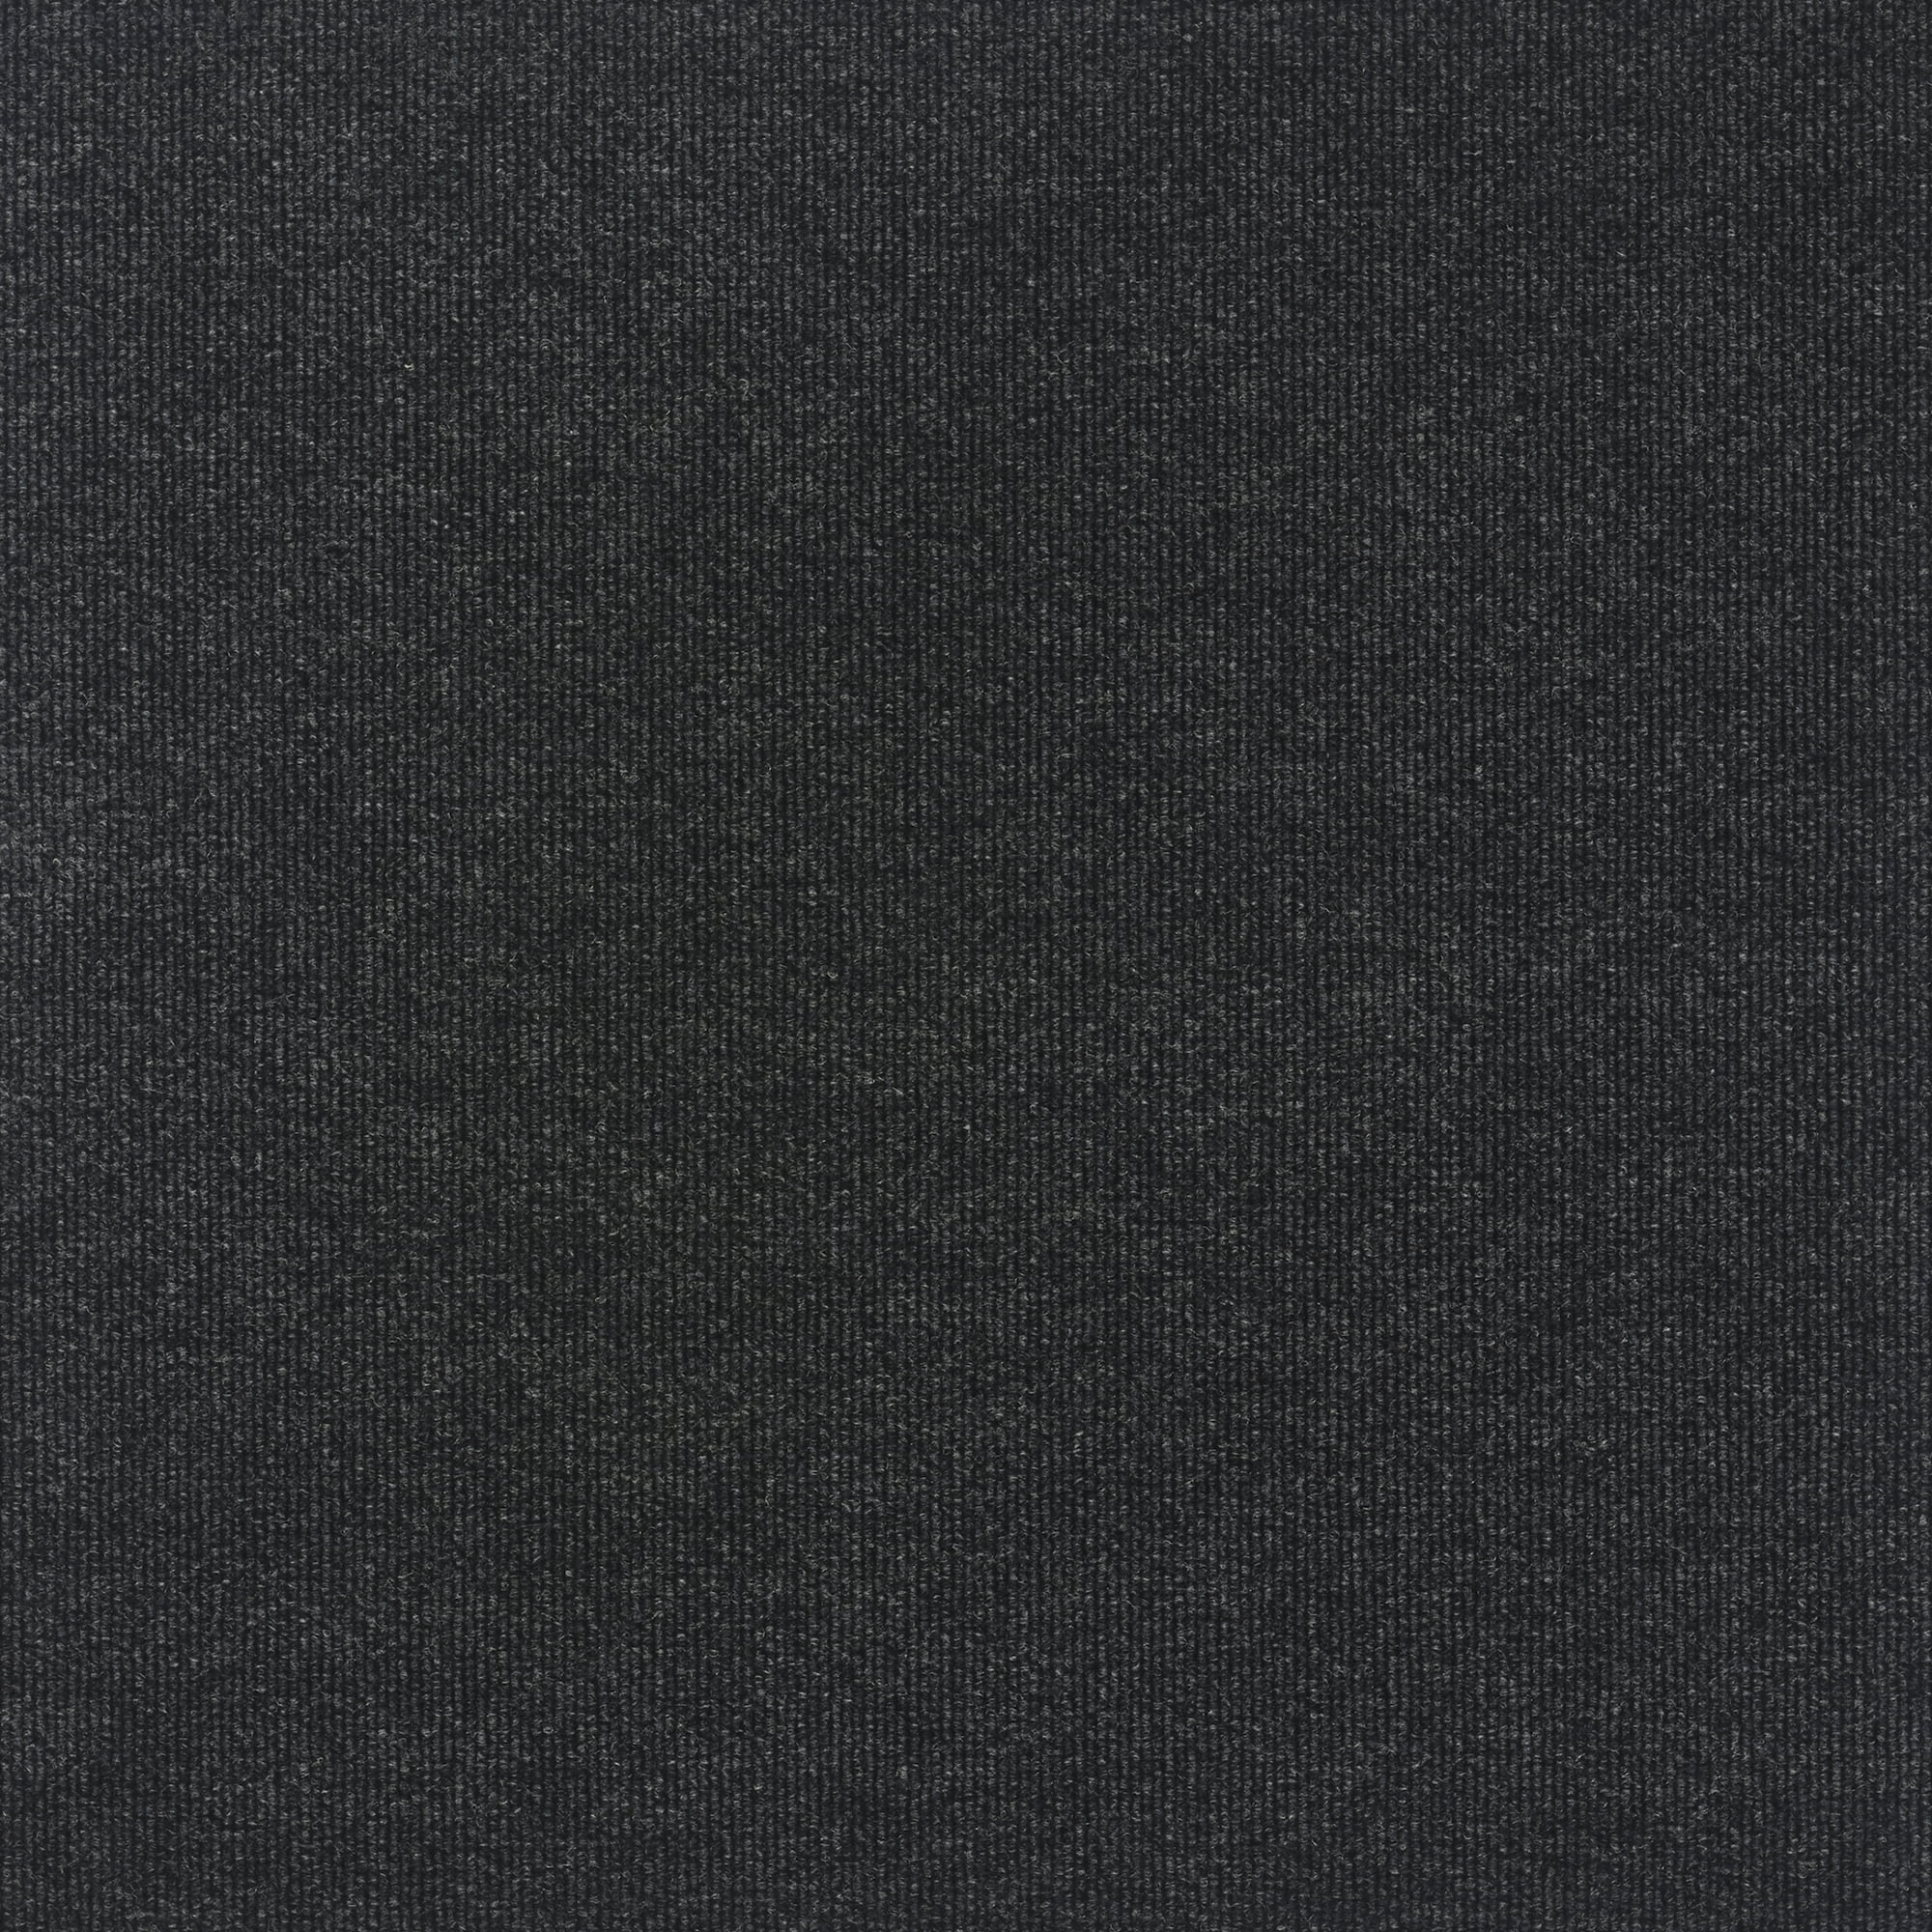 Starboard Black Ice Carpet Tiles - 24